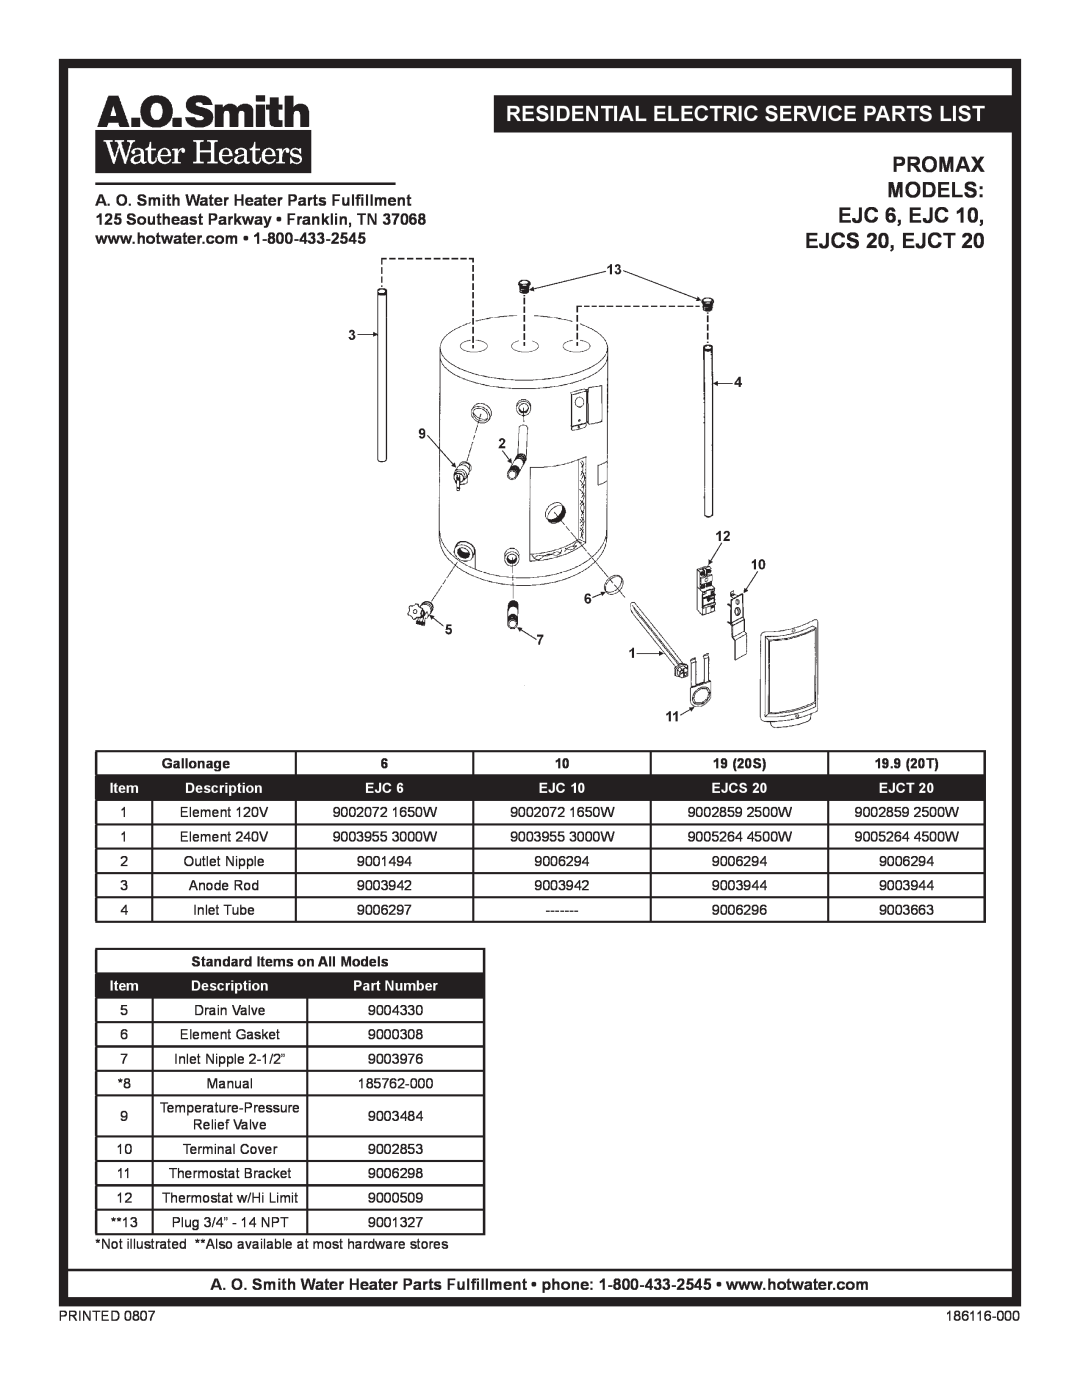 A.O. Smith manual Residential Electric Service Parts List, PROMAX MODELS EJC 6, EJC EJCS 20, EJCT, Gallonage, 19 20S 